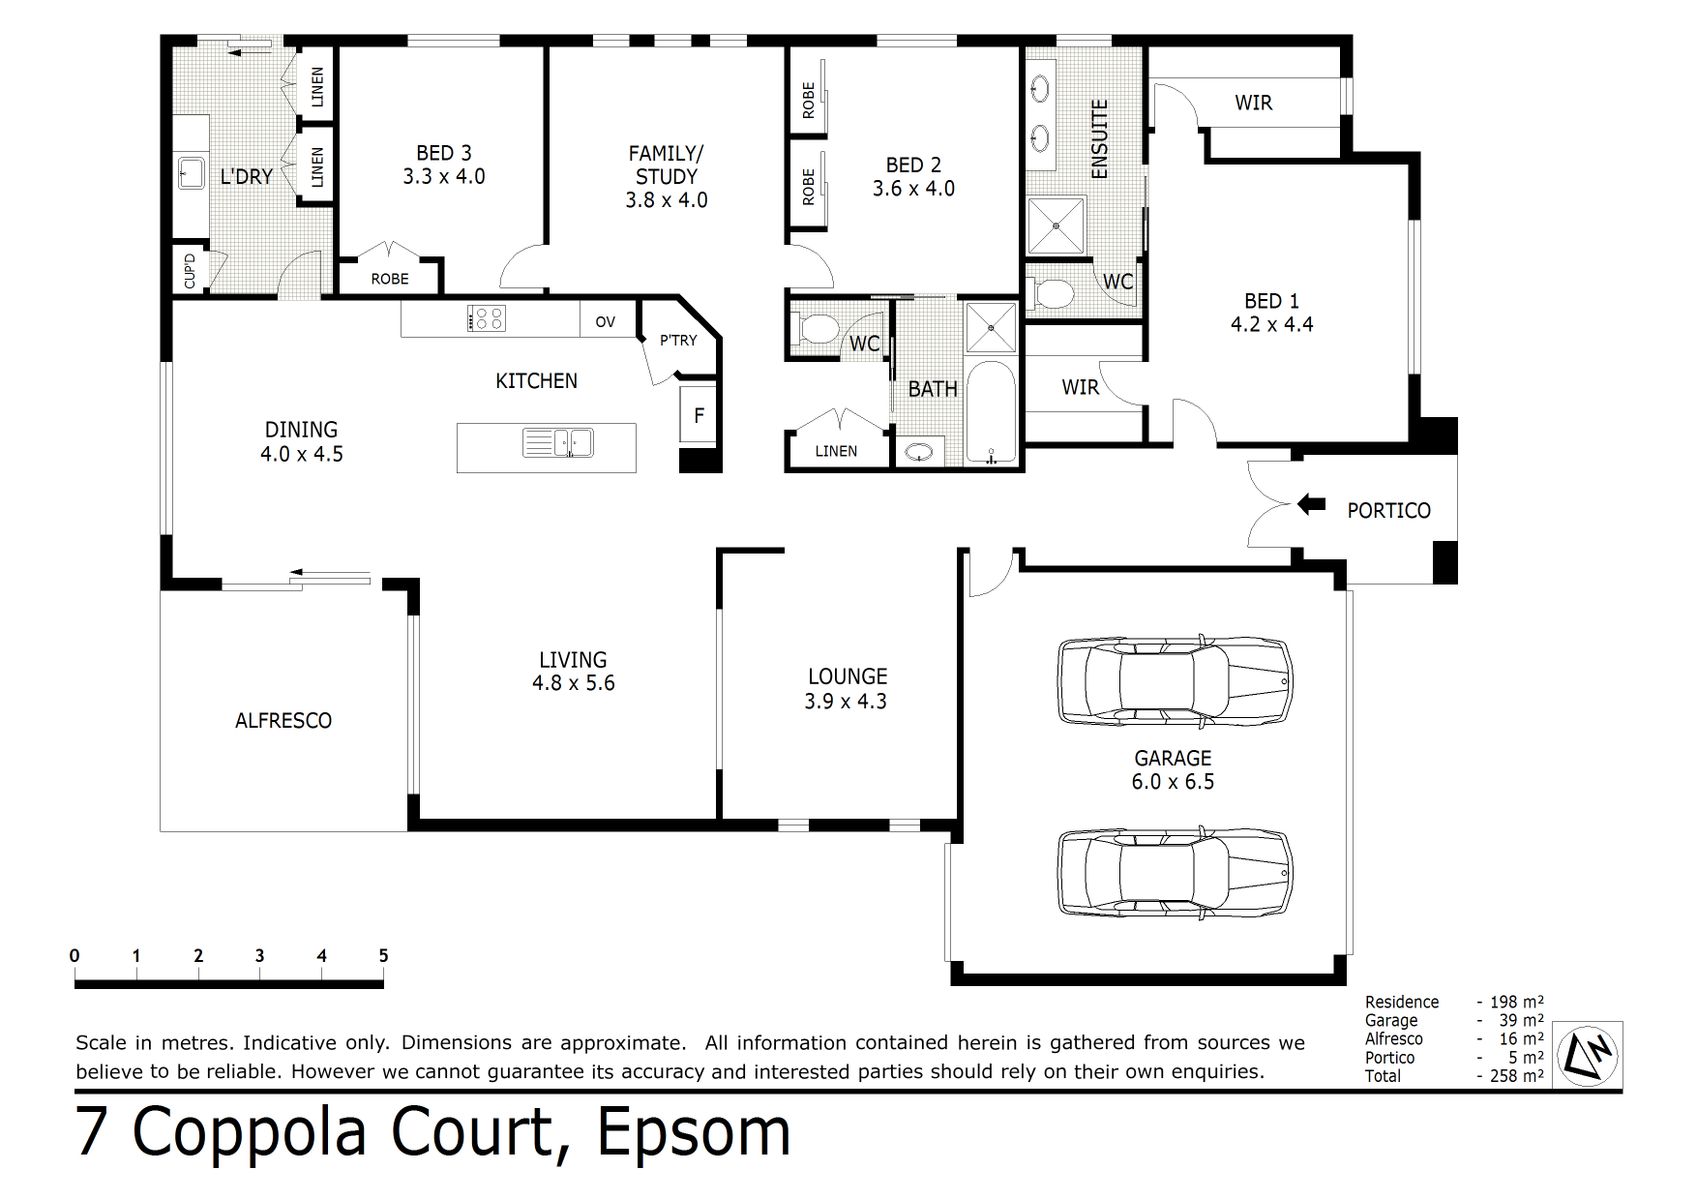 7 Coppola Court Epsom (26 MAY 2021) 237sqm